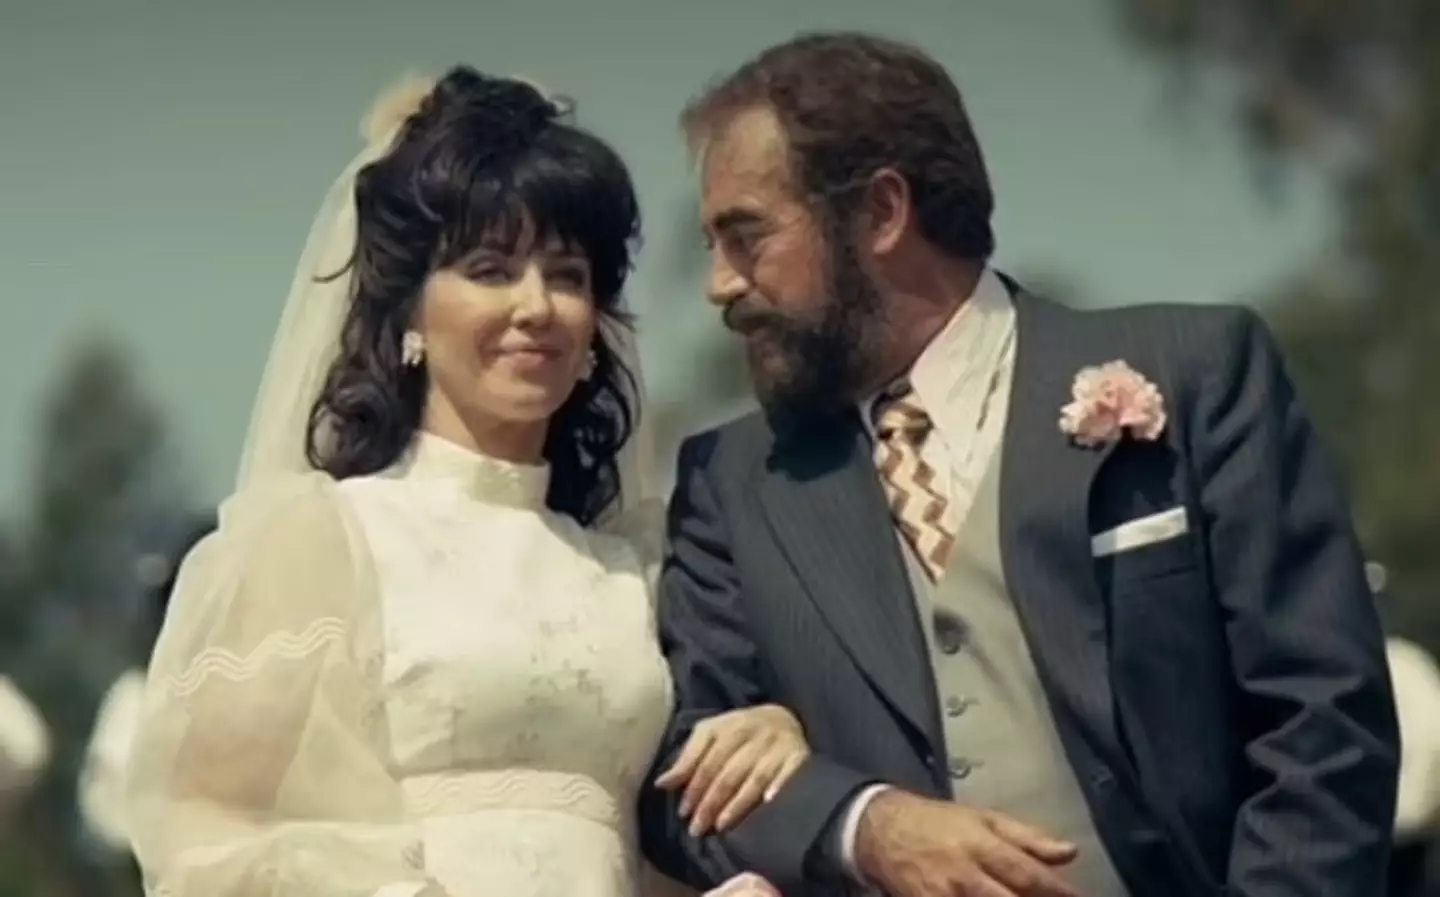 Laureano Oubiña didn't appreciate the inclusion of a sex scene with him and his wife Esther Lago García in the series (Bambu Producciones)